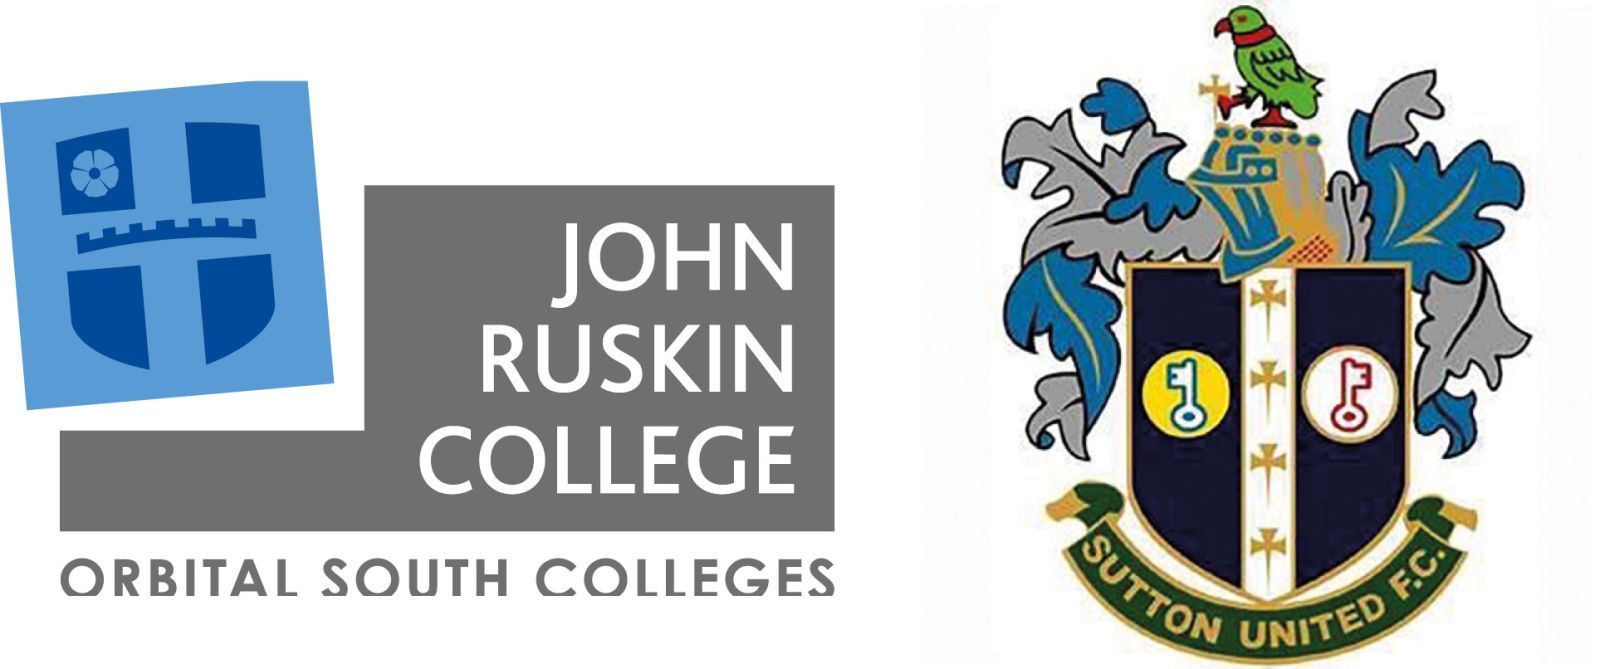 John Ruskin College Logo and Sutton united football club logo